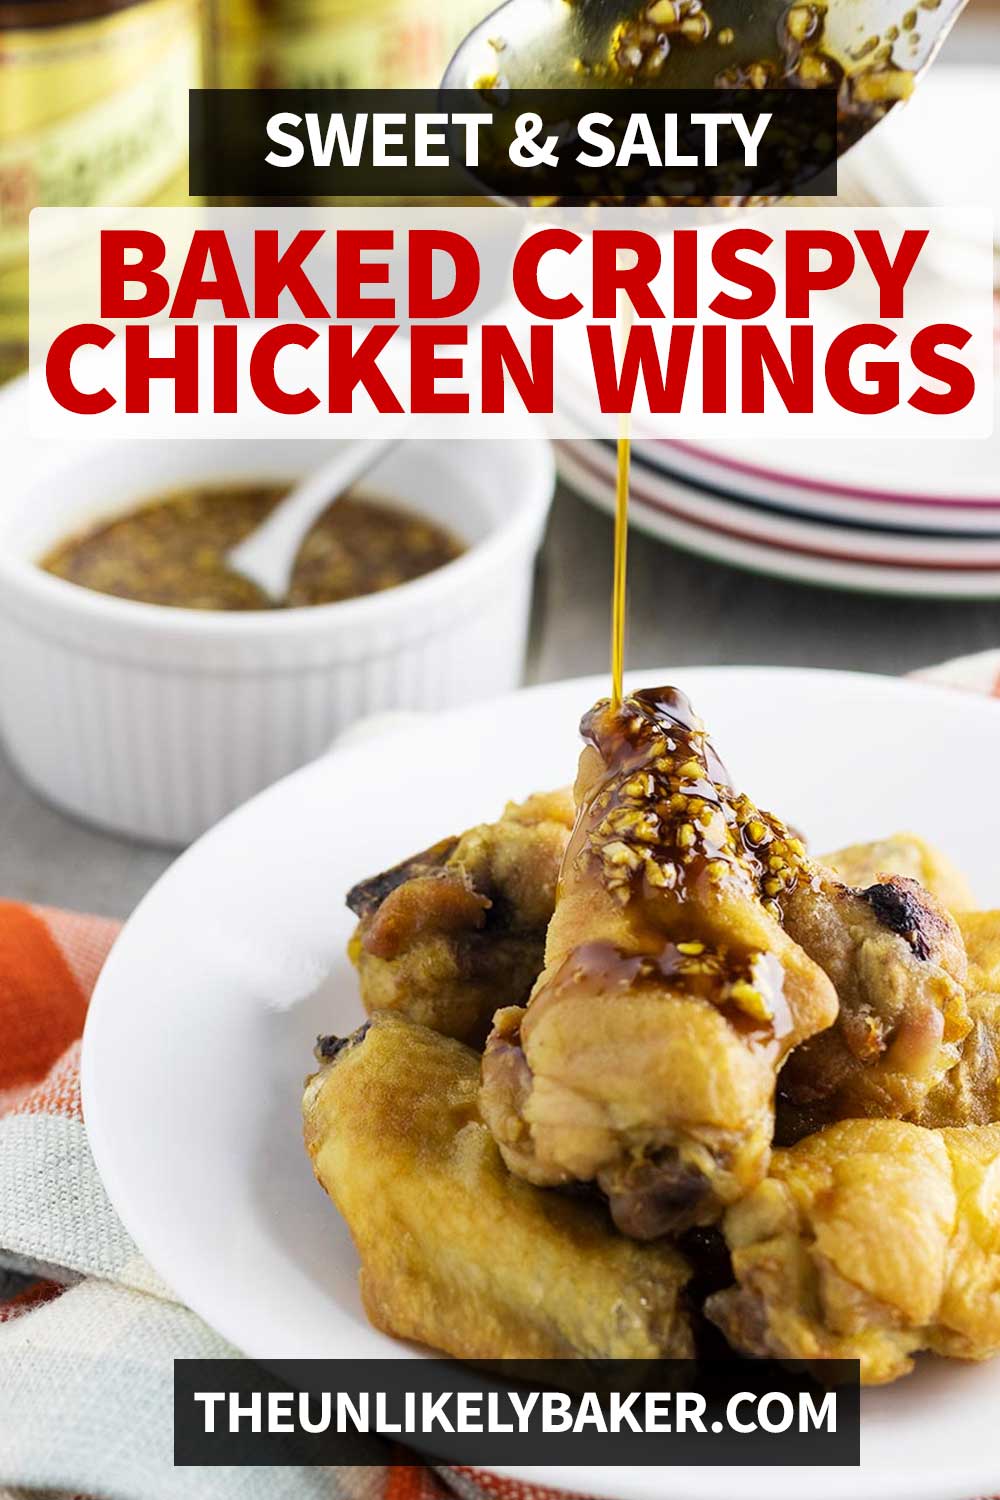 Crispy Baked Asian Chicken Wings (No Baking Powder) - The Unlikely Baker®